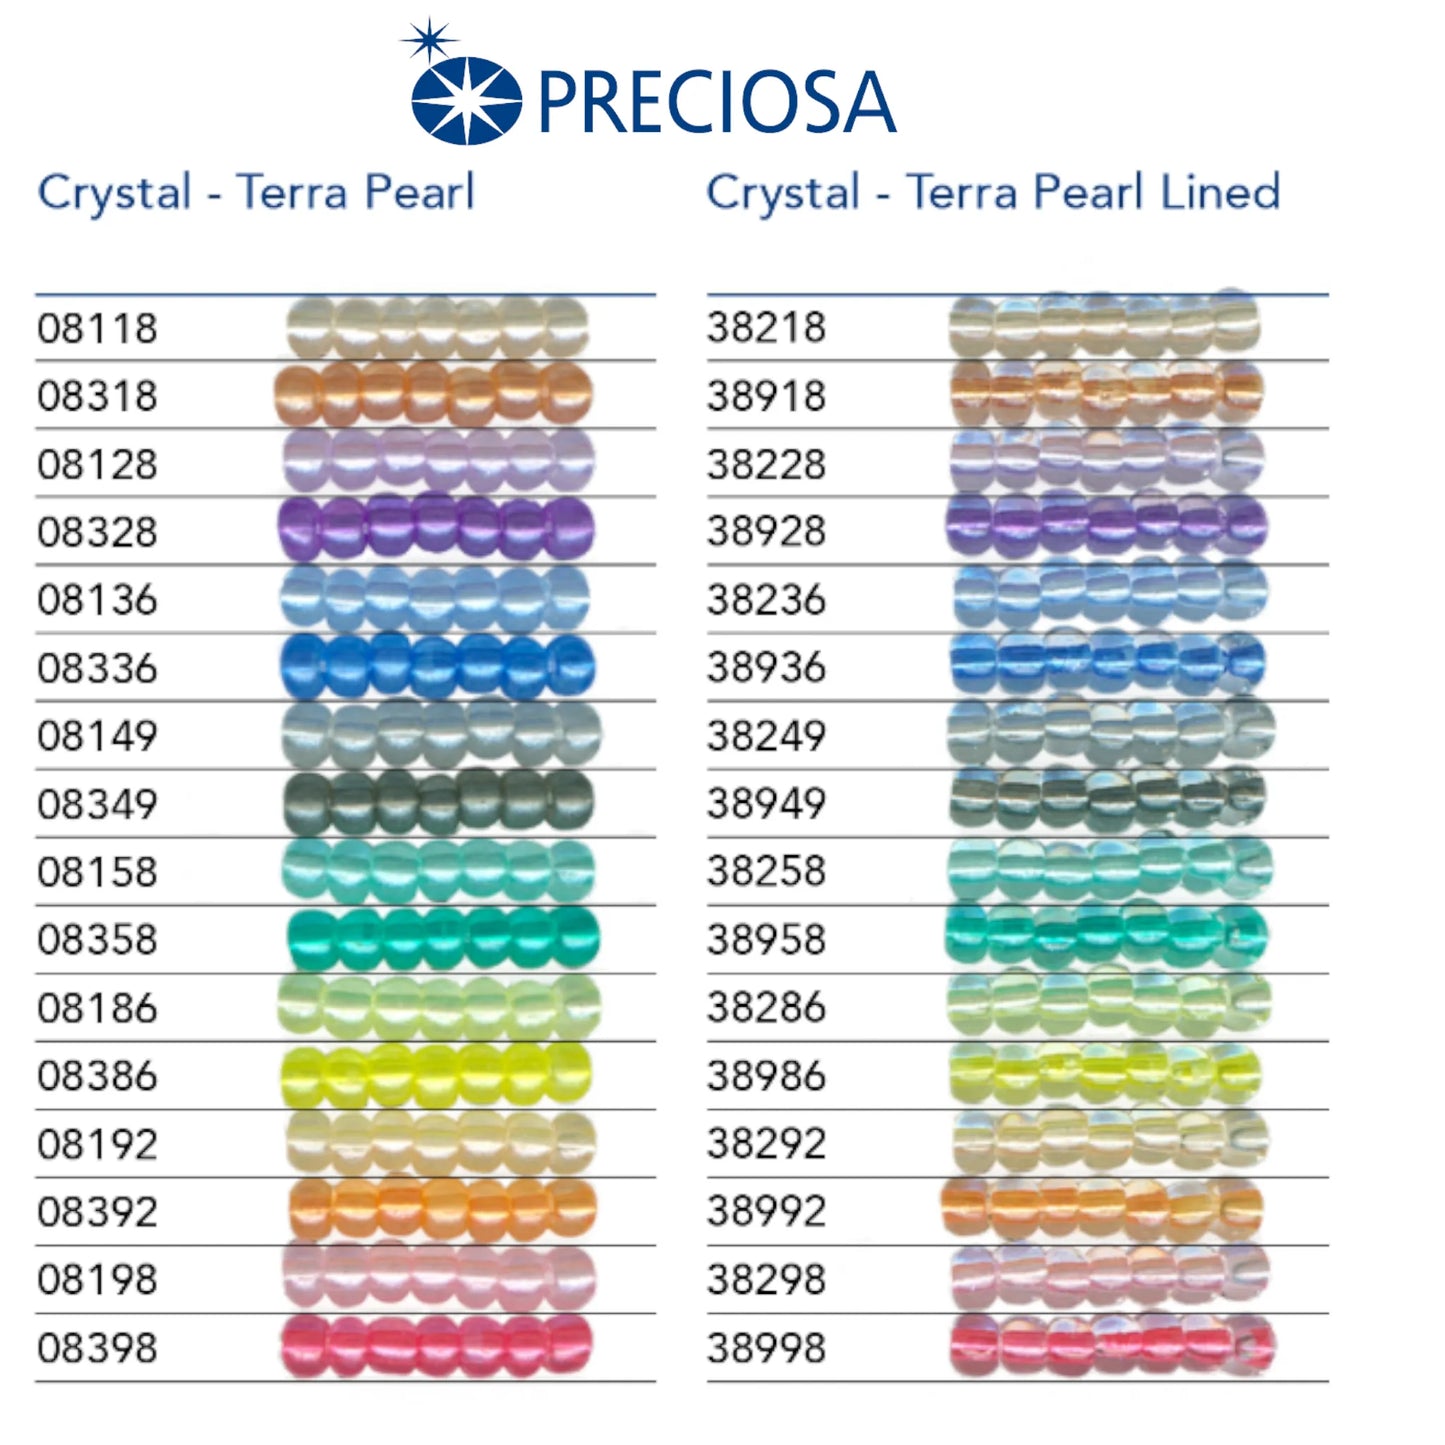 08158 Rocailles tchèques PRECIOSA Rocailles 10/0 turquoise. Cristal - Terra Perle.